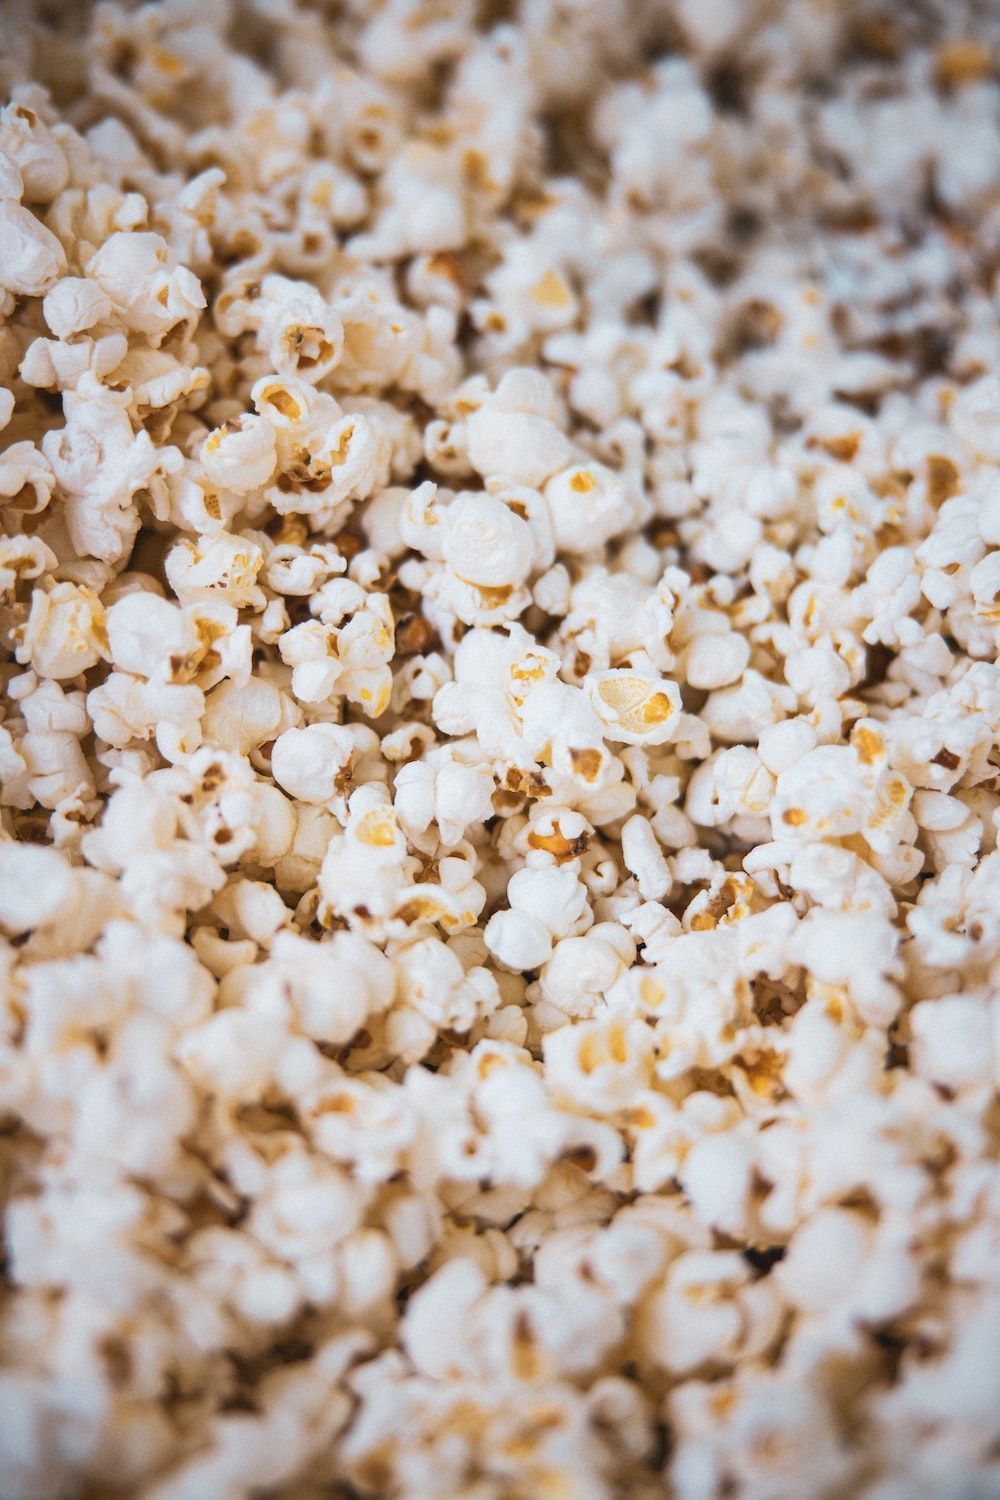 Cinema Popcorn Picture. Download Free Image